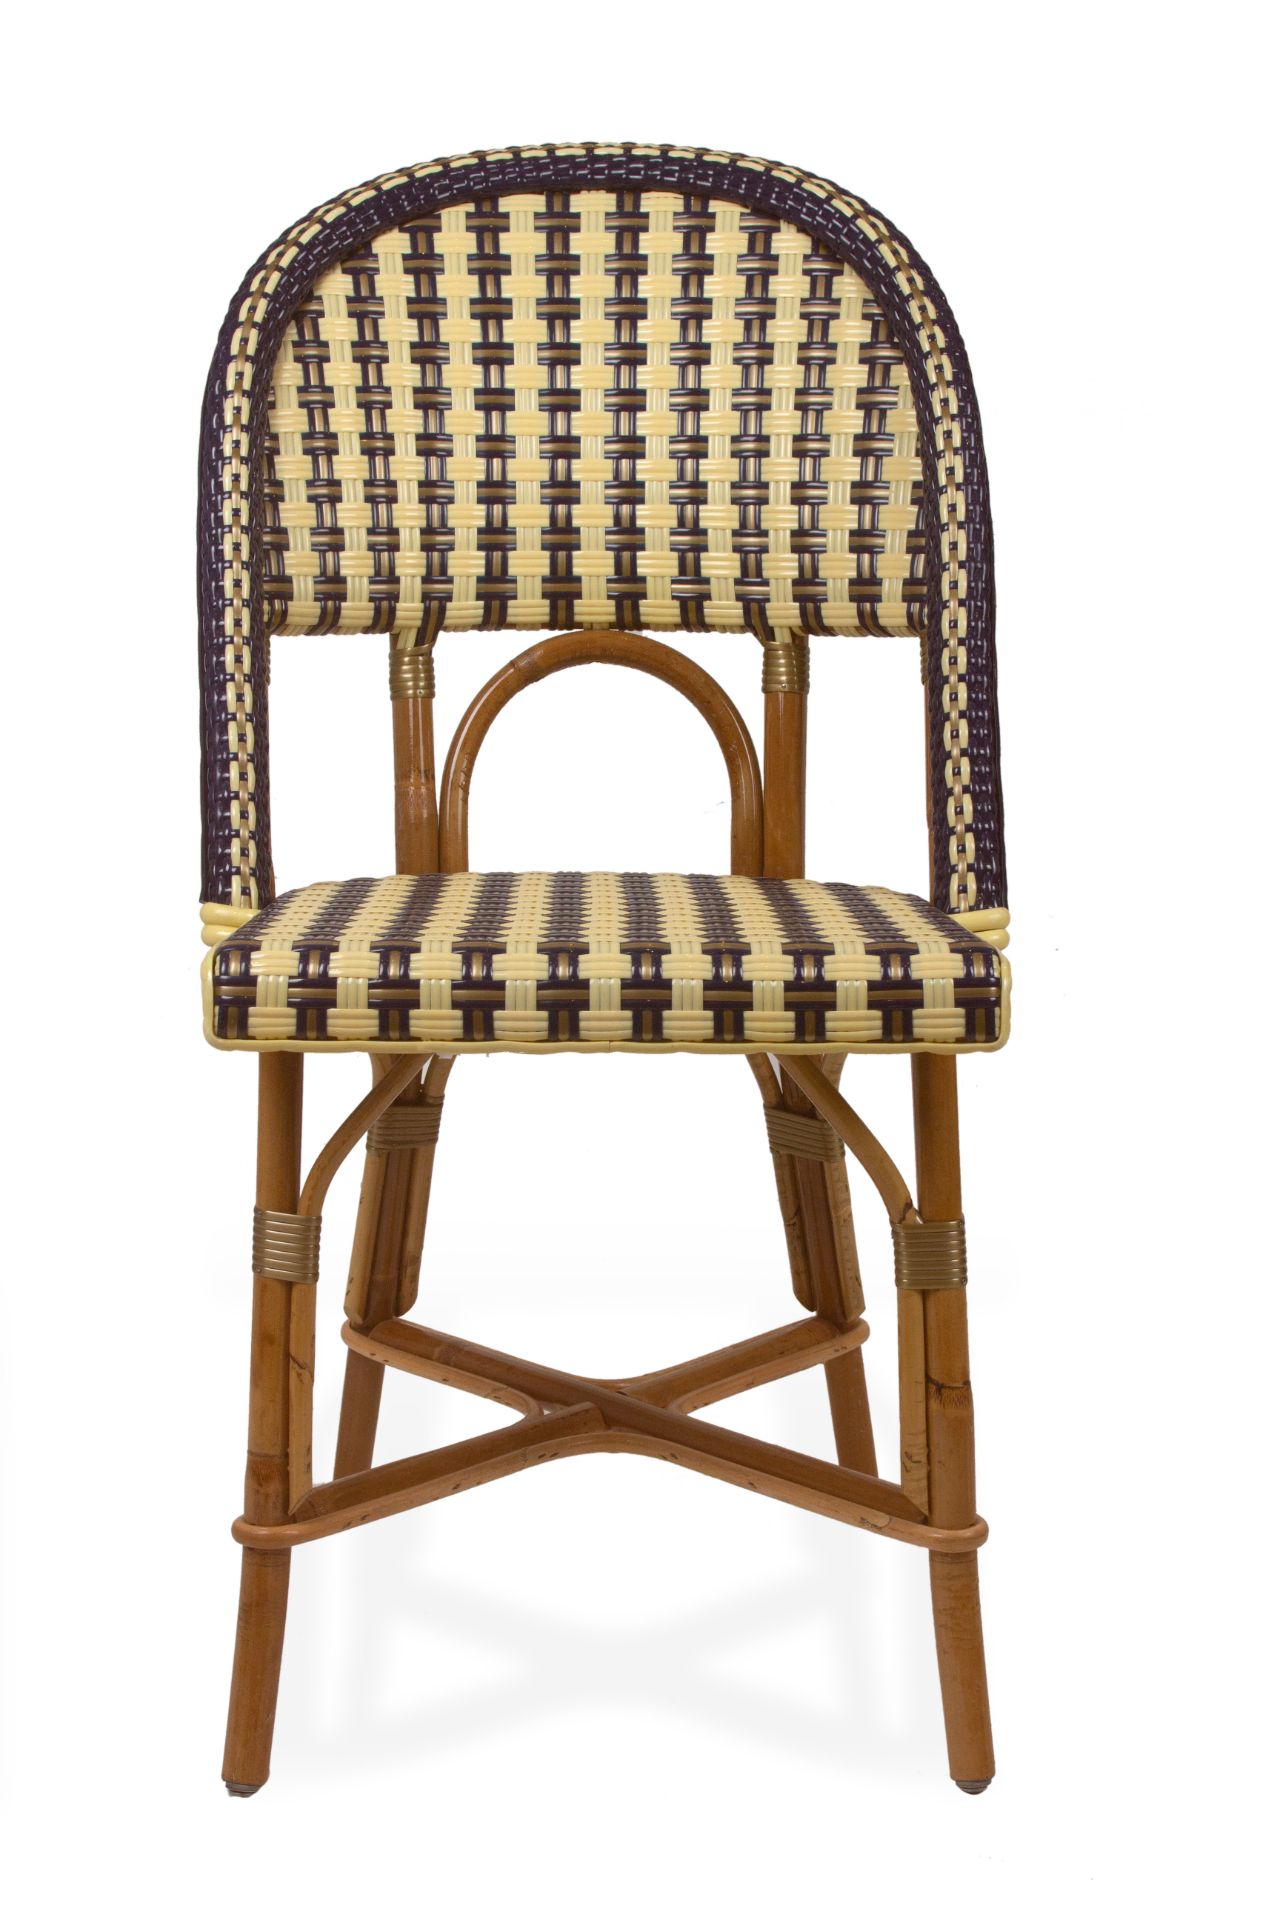 Maison Gatti. Set of eight 'Select' chairs - Image 3 of 4